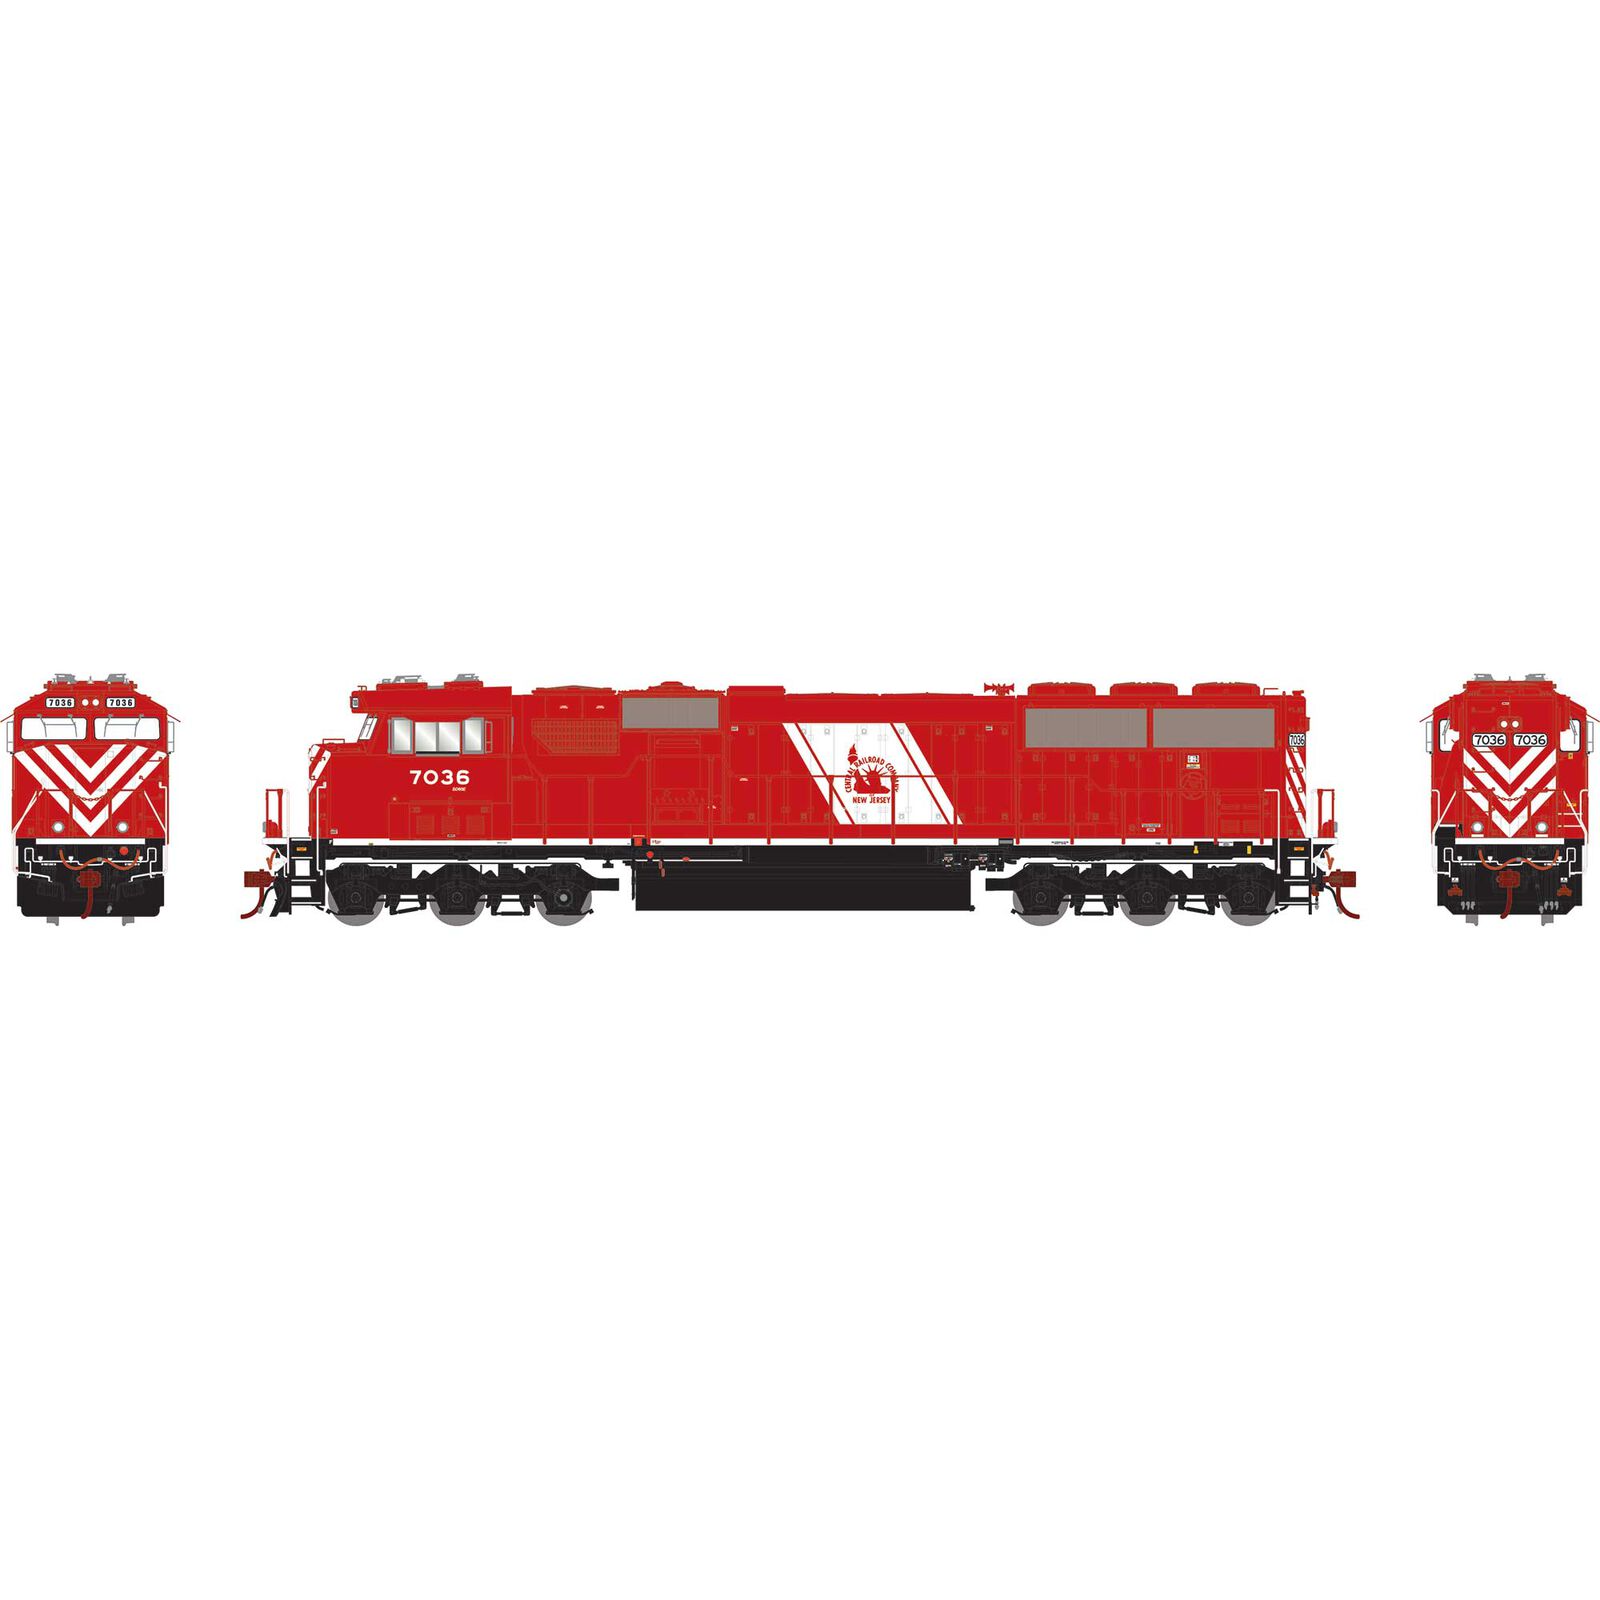 HO SD60E Locomotive with DCC & Sound, NS / CNJ / Heritage #7036